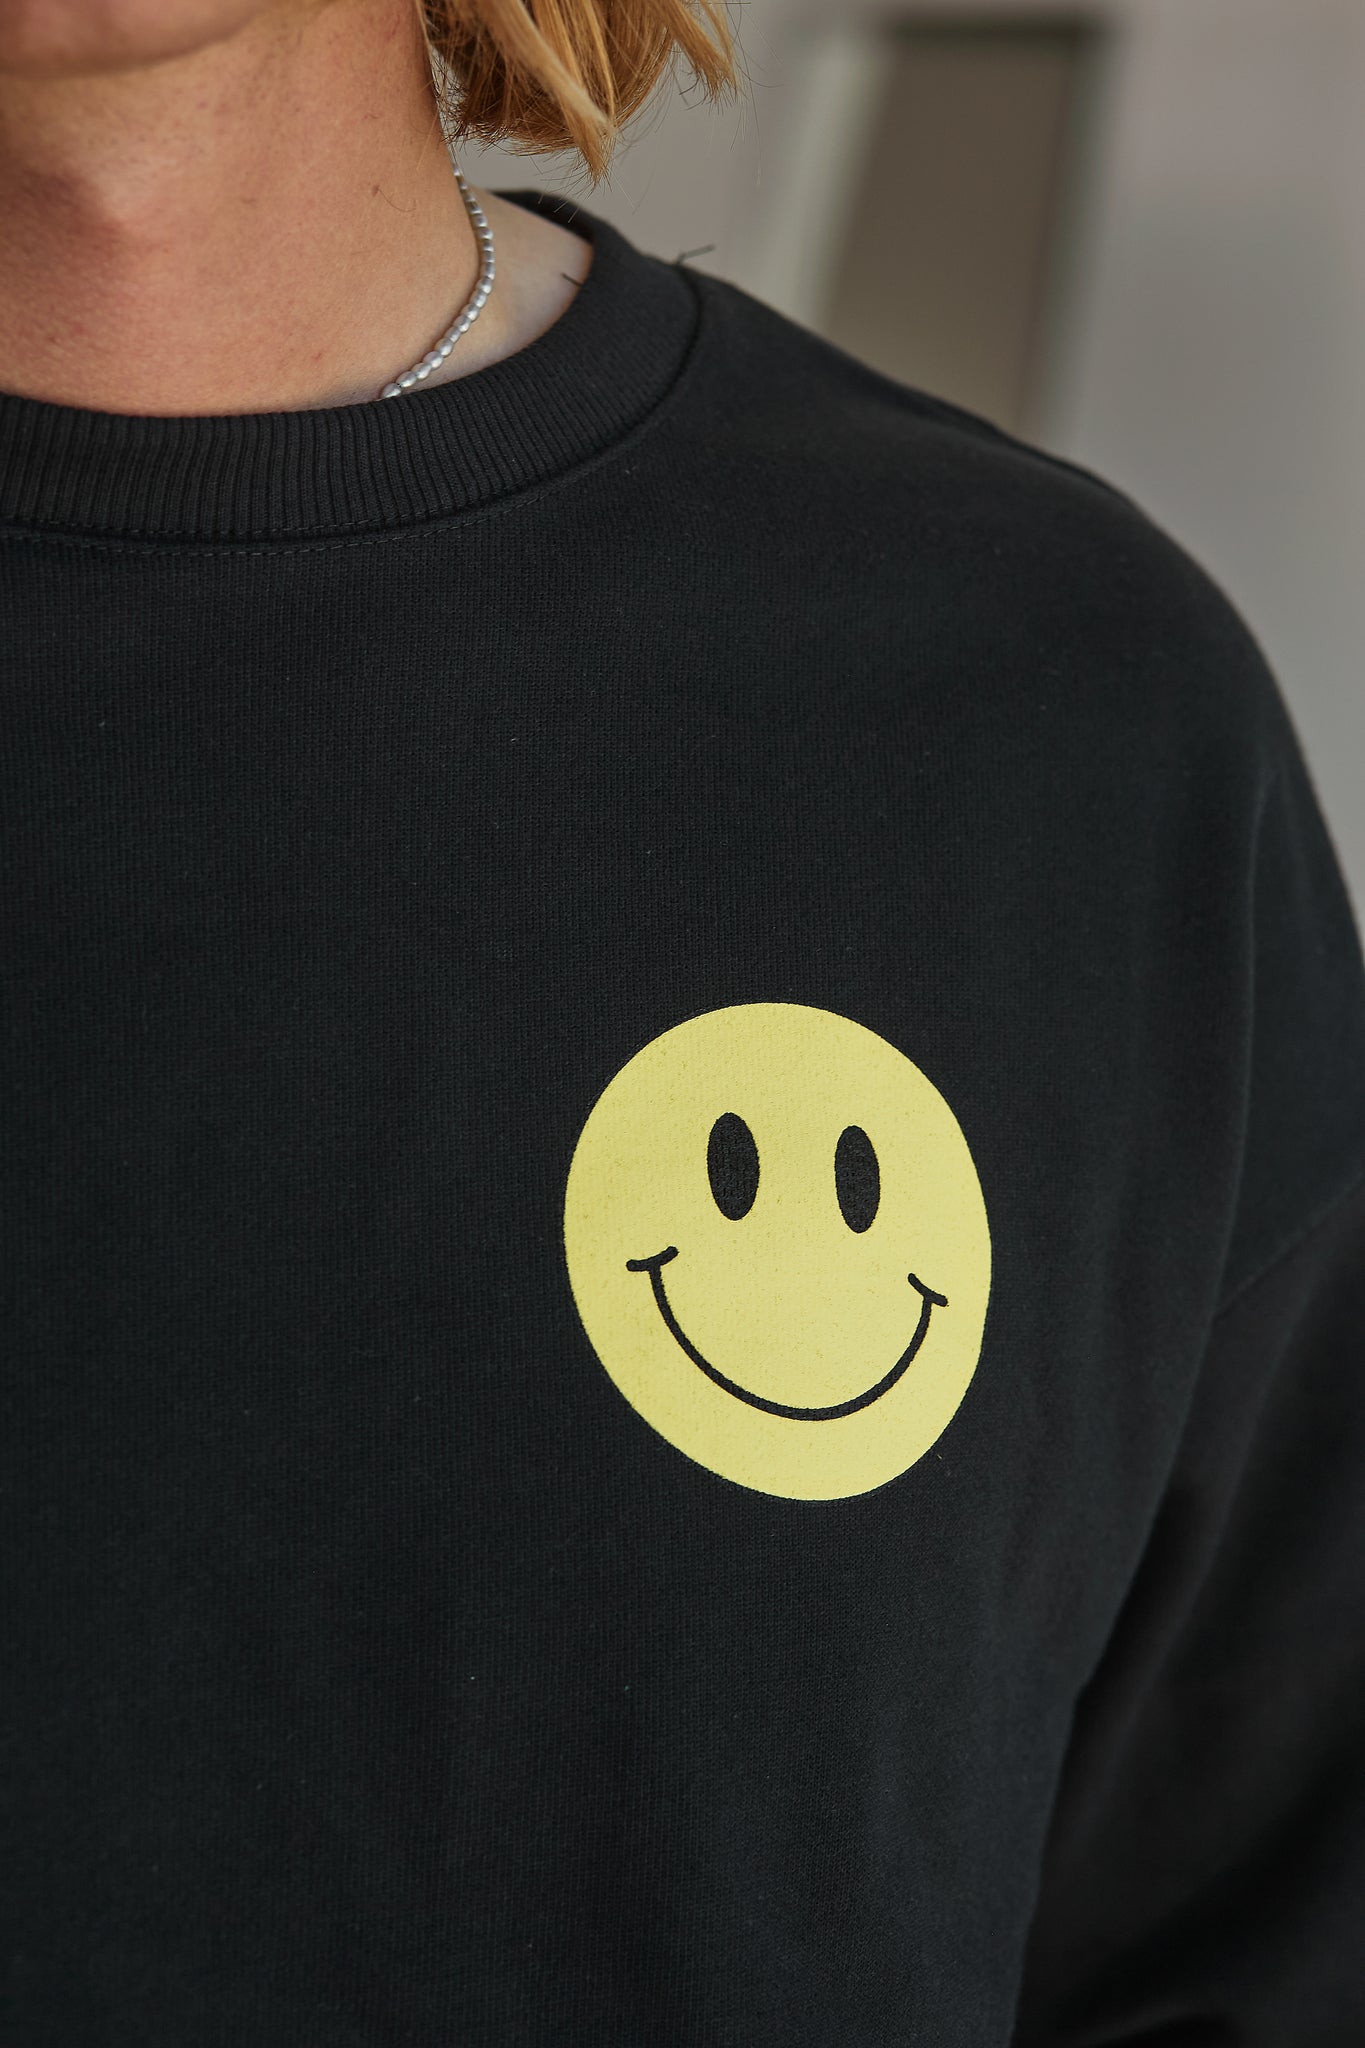 Wild Fable Smiley Face Sweatshirt  Sweatshirts, Clothes design, Tops